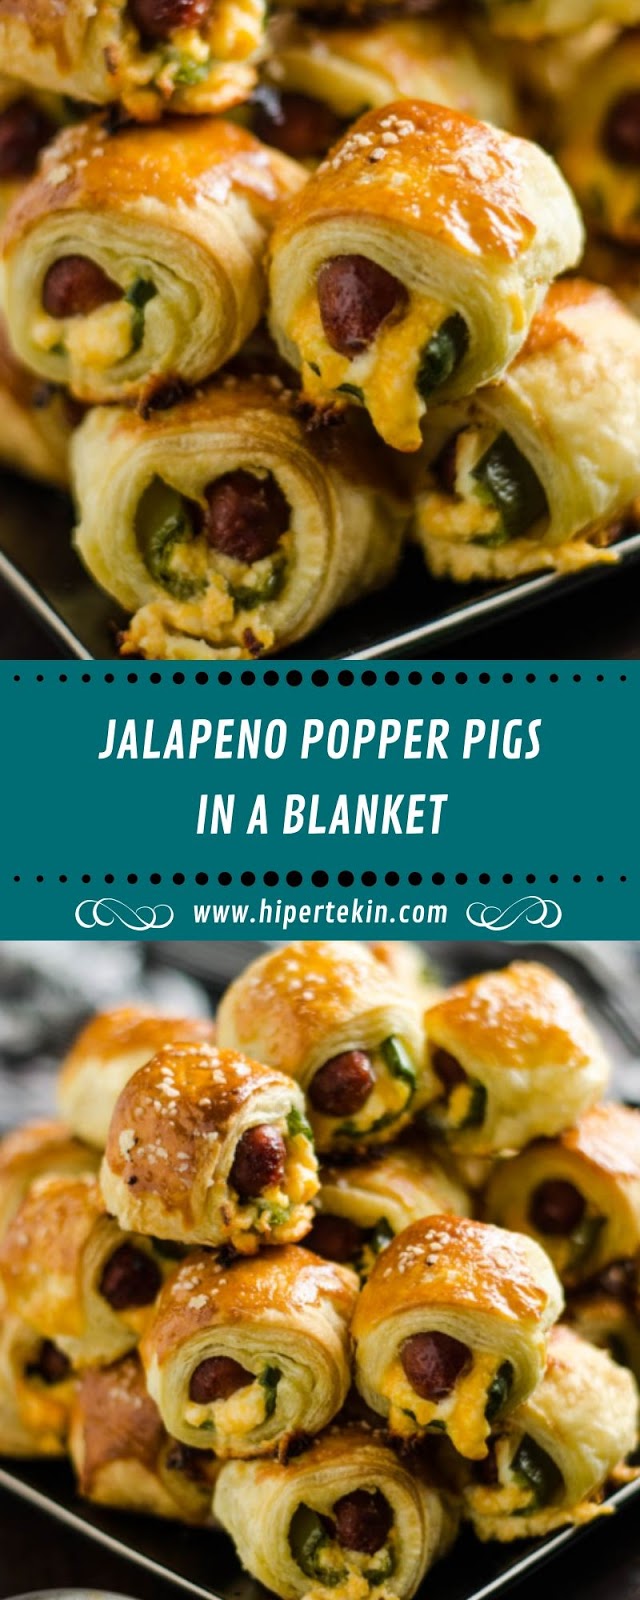 JALAPENO POPPER PIGS IN A BLANKET